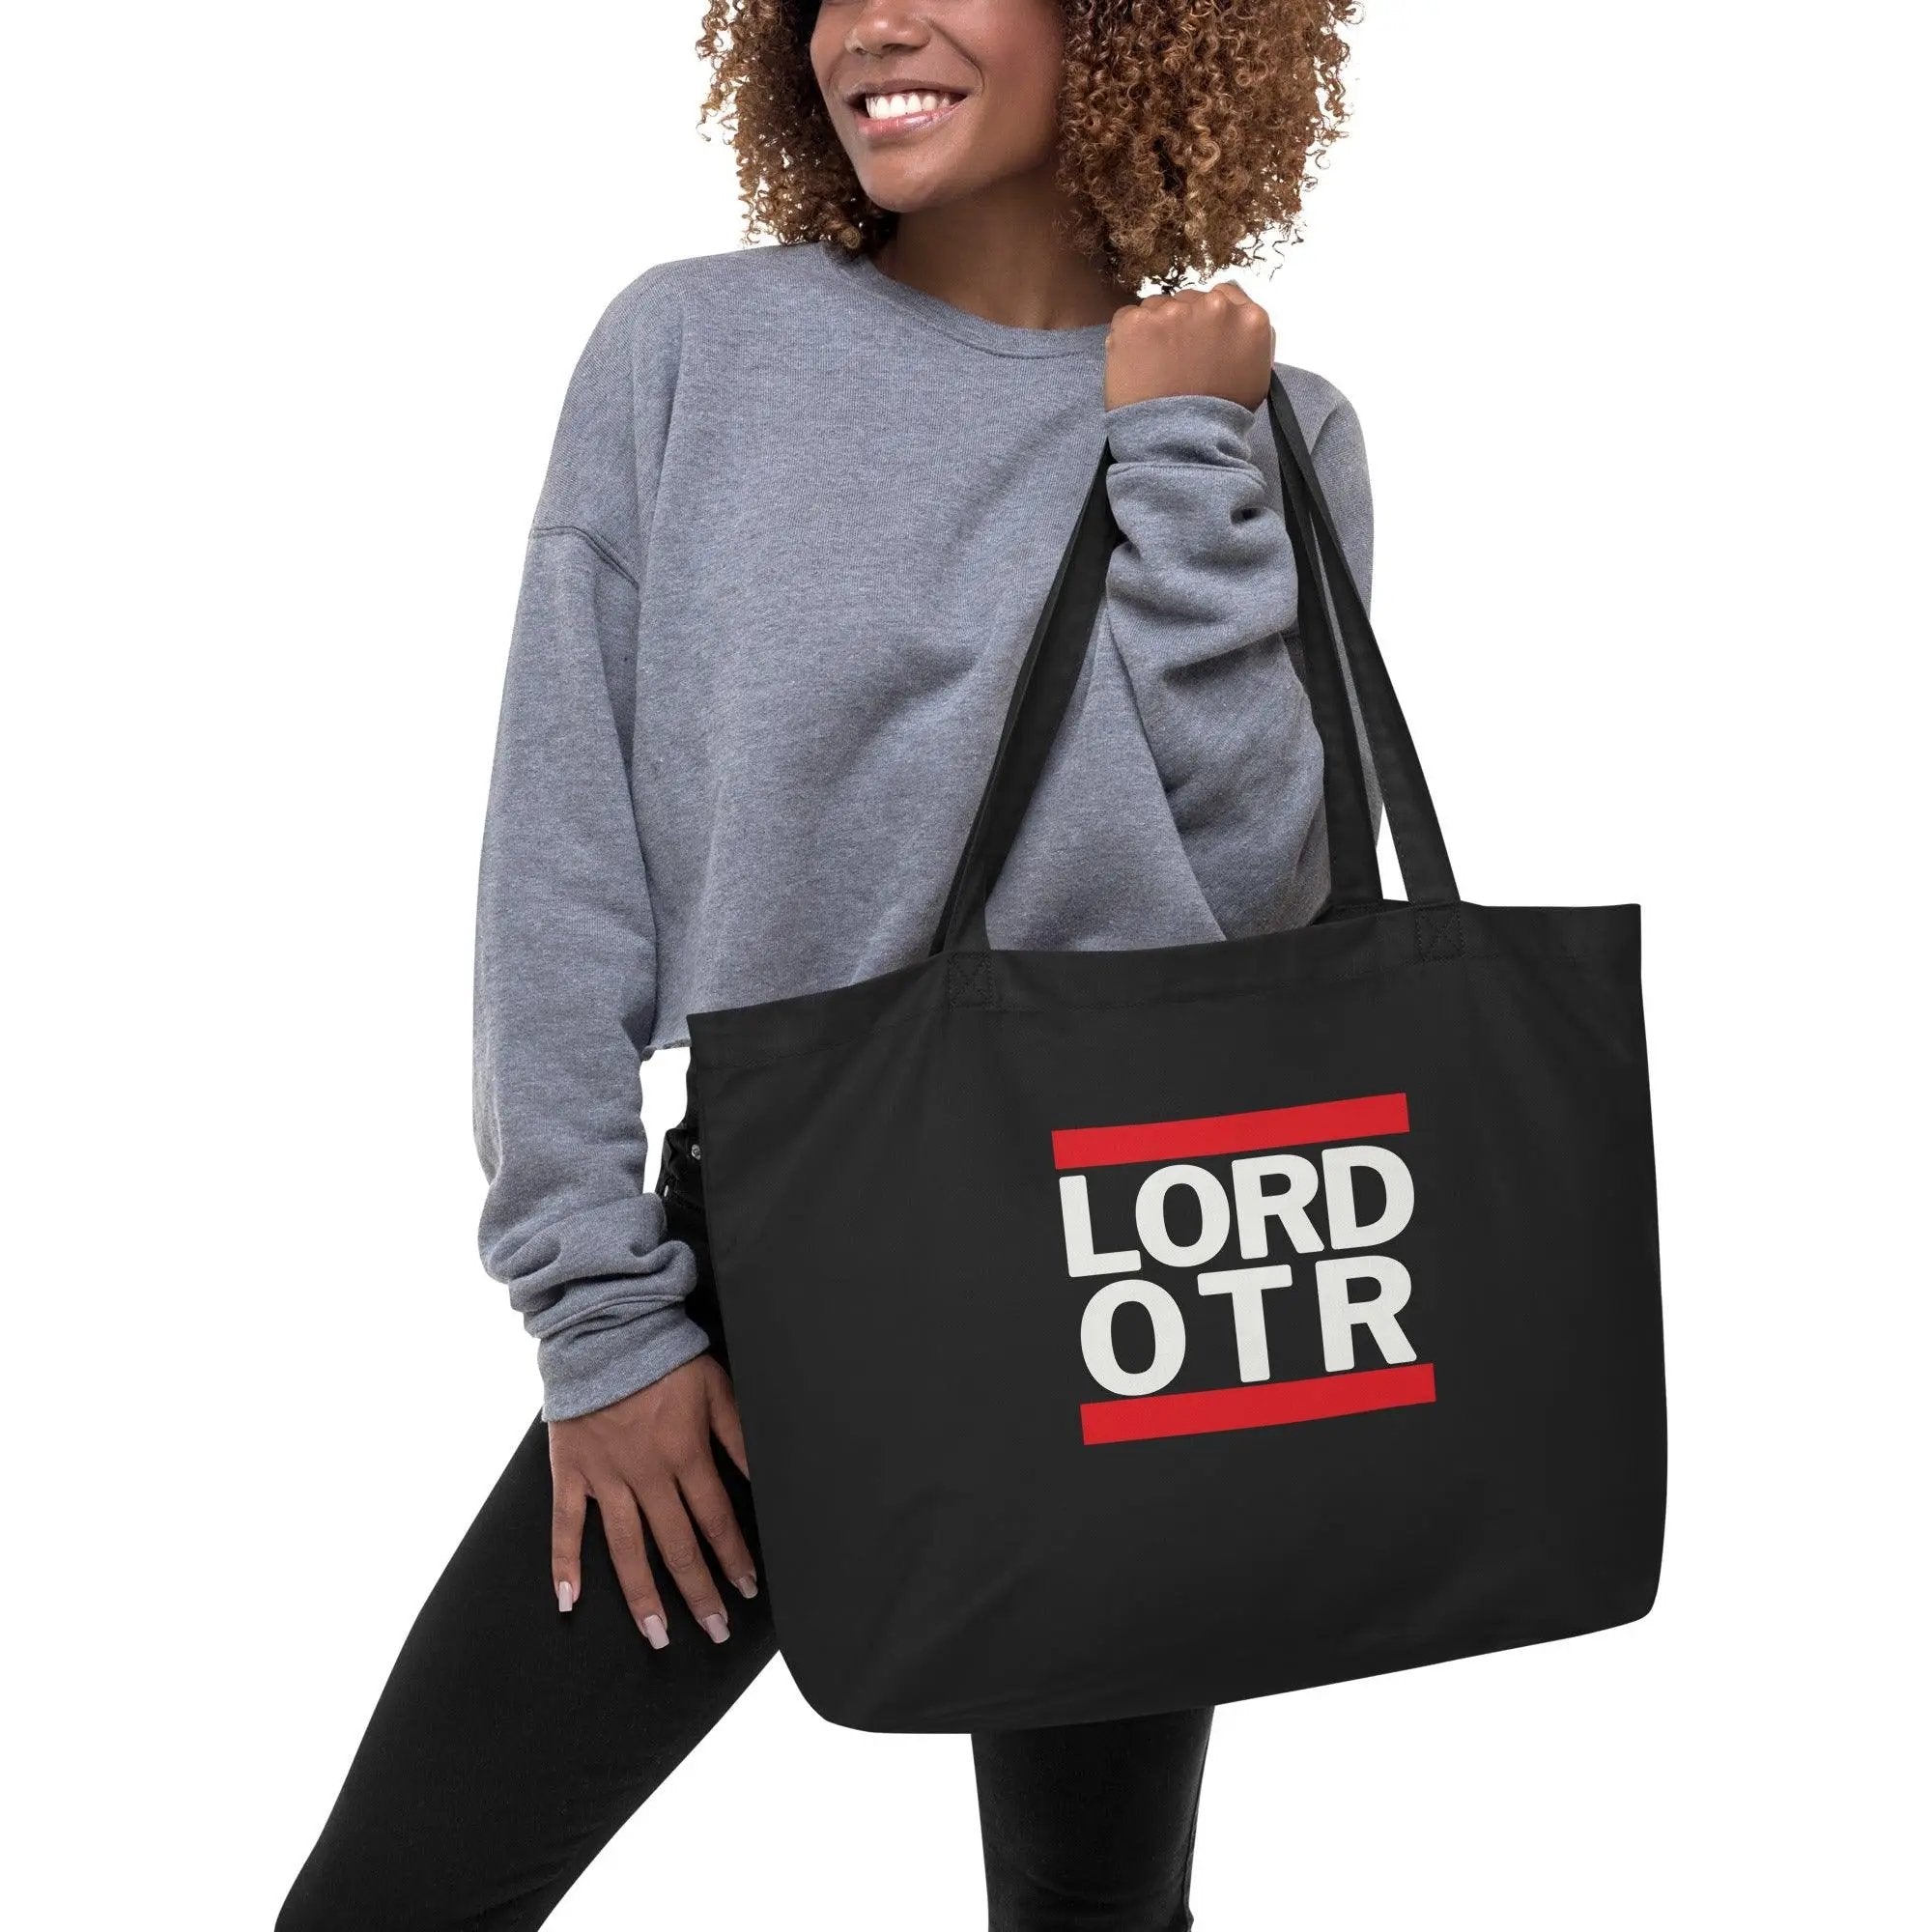 Lord OTR/DMC Large organic tote bag